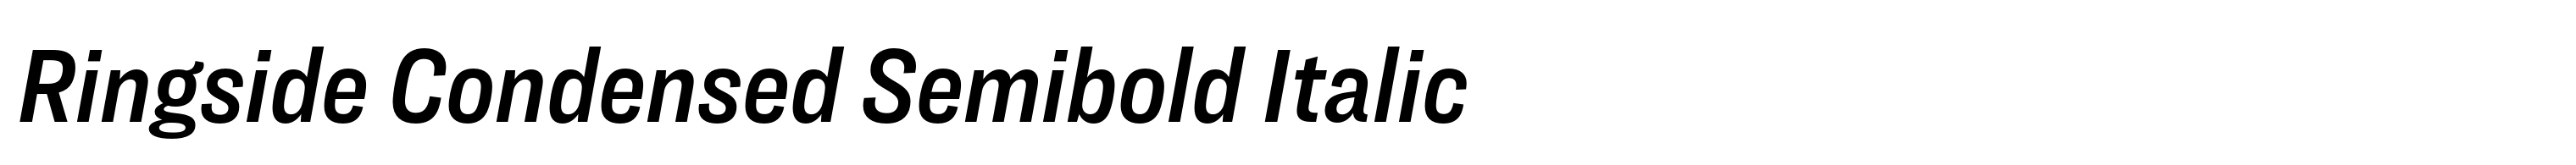 Ringside Condensed Semibold Italic